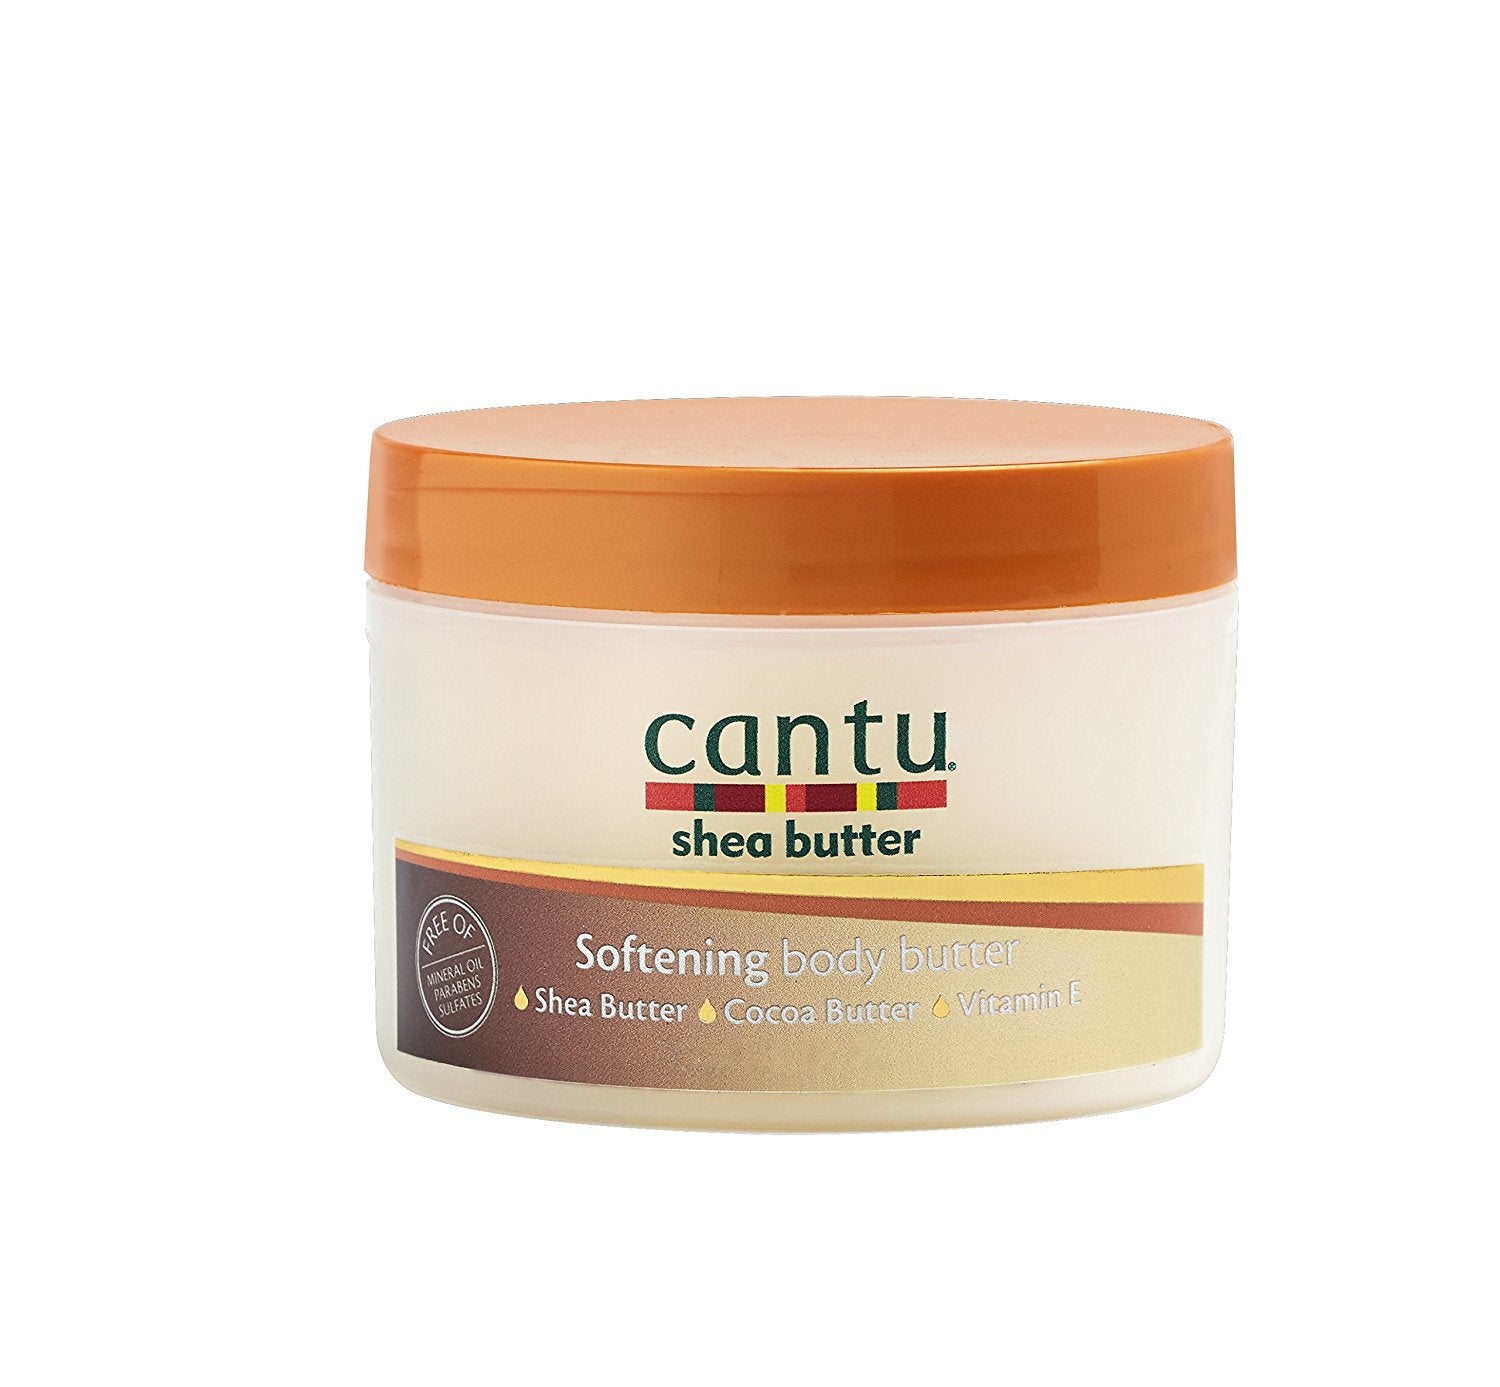 Cantu Softening Body Butter, 7.25 Ounce